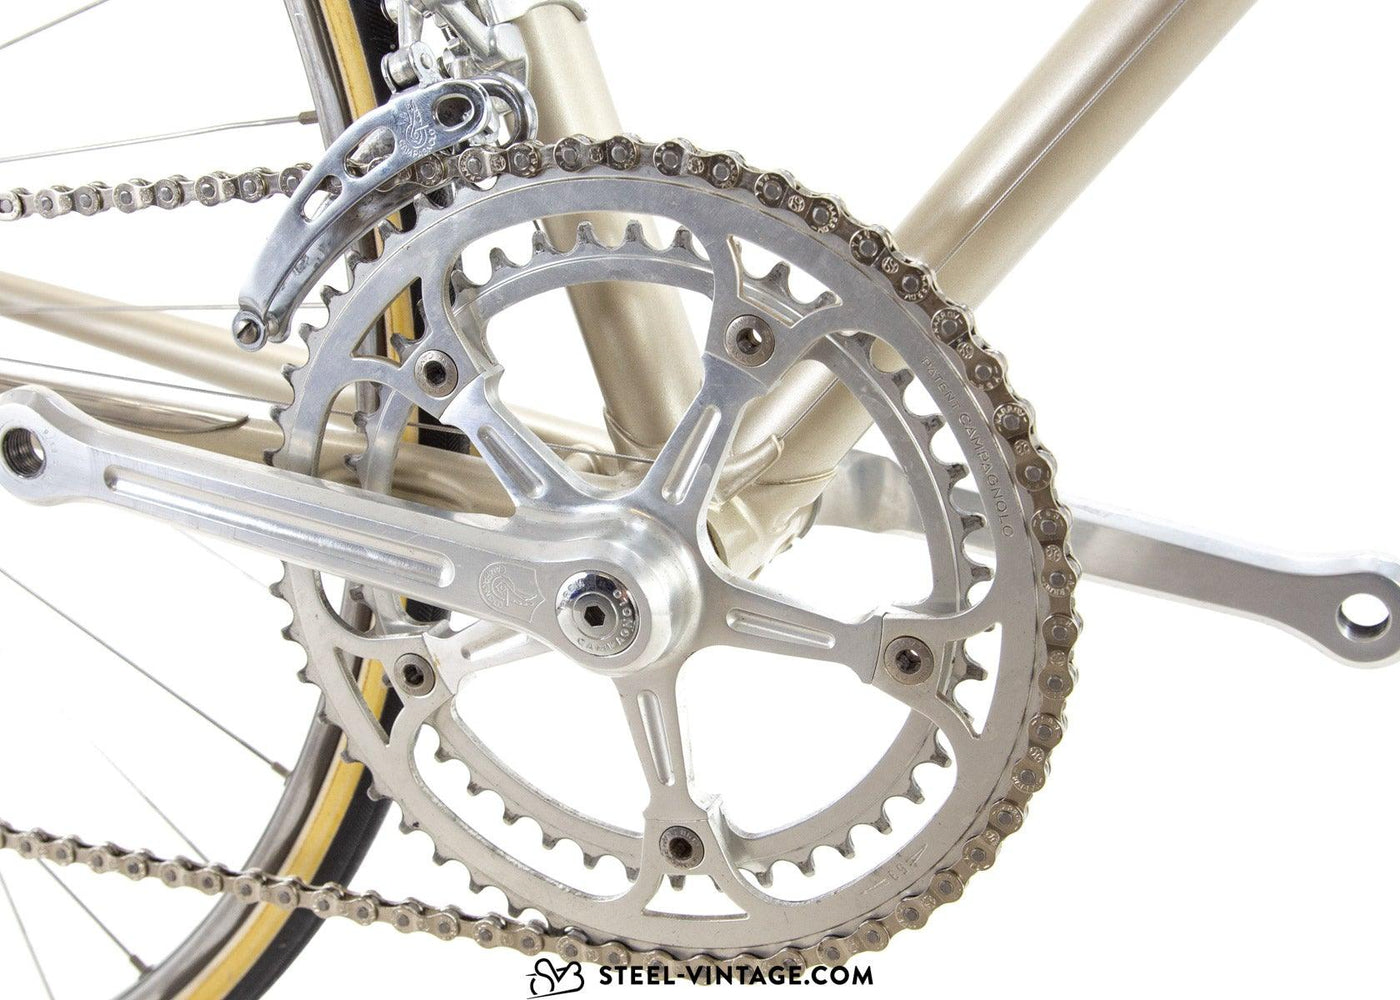 Francesco Moser Classic Road Bicycle 1970s - Steel Vintage Bikes